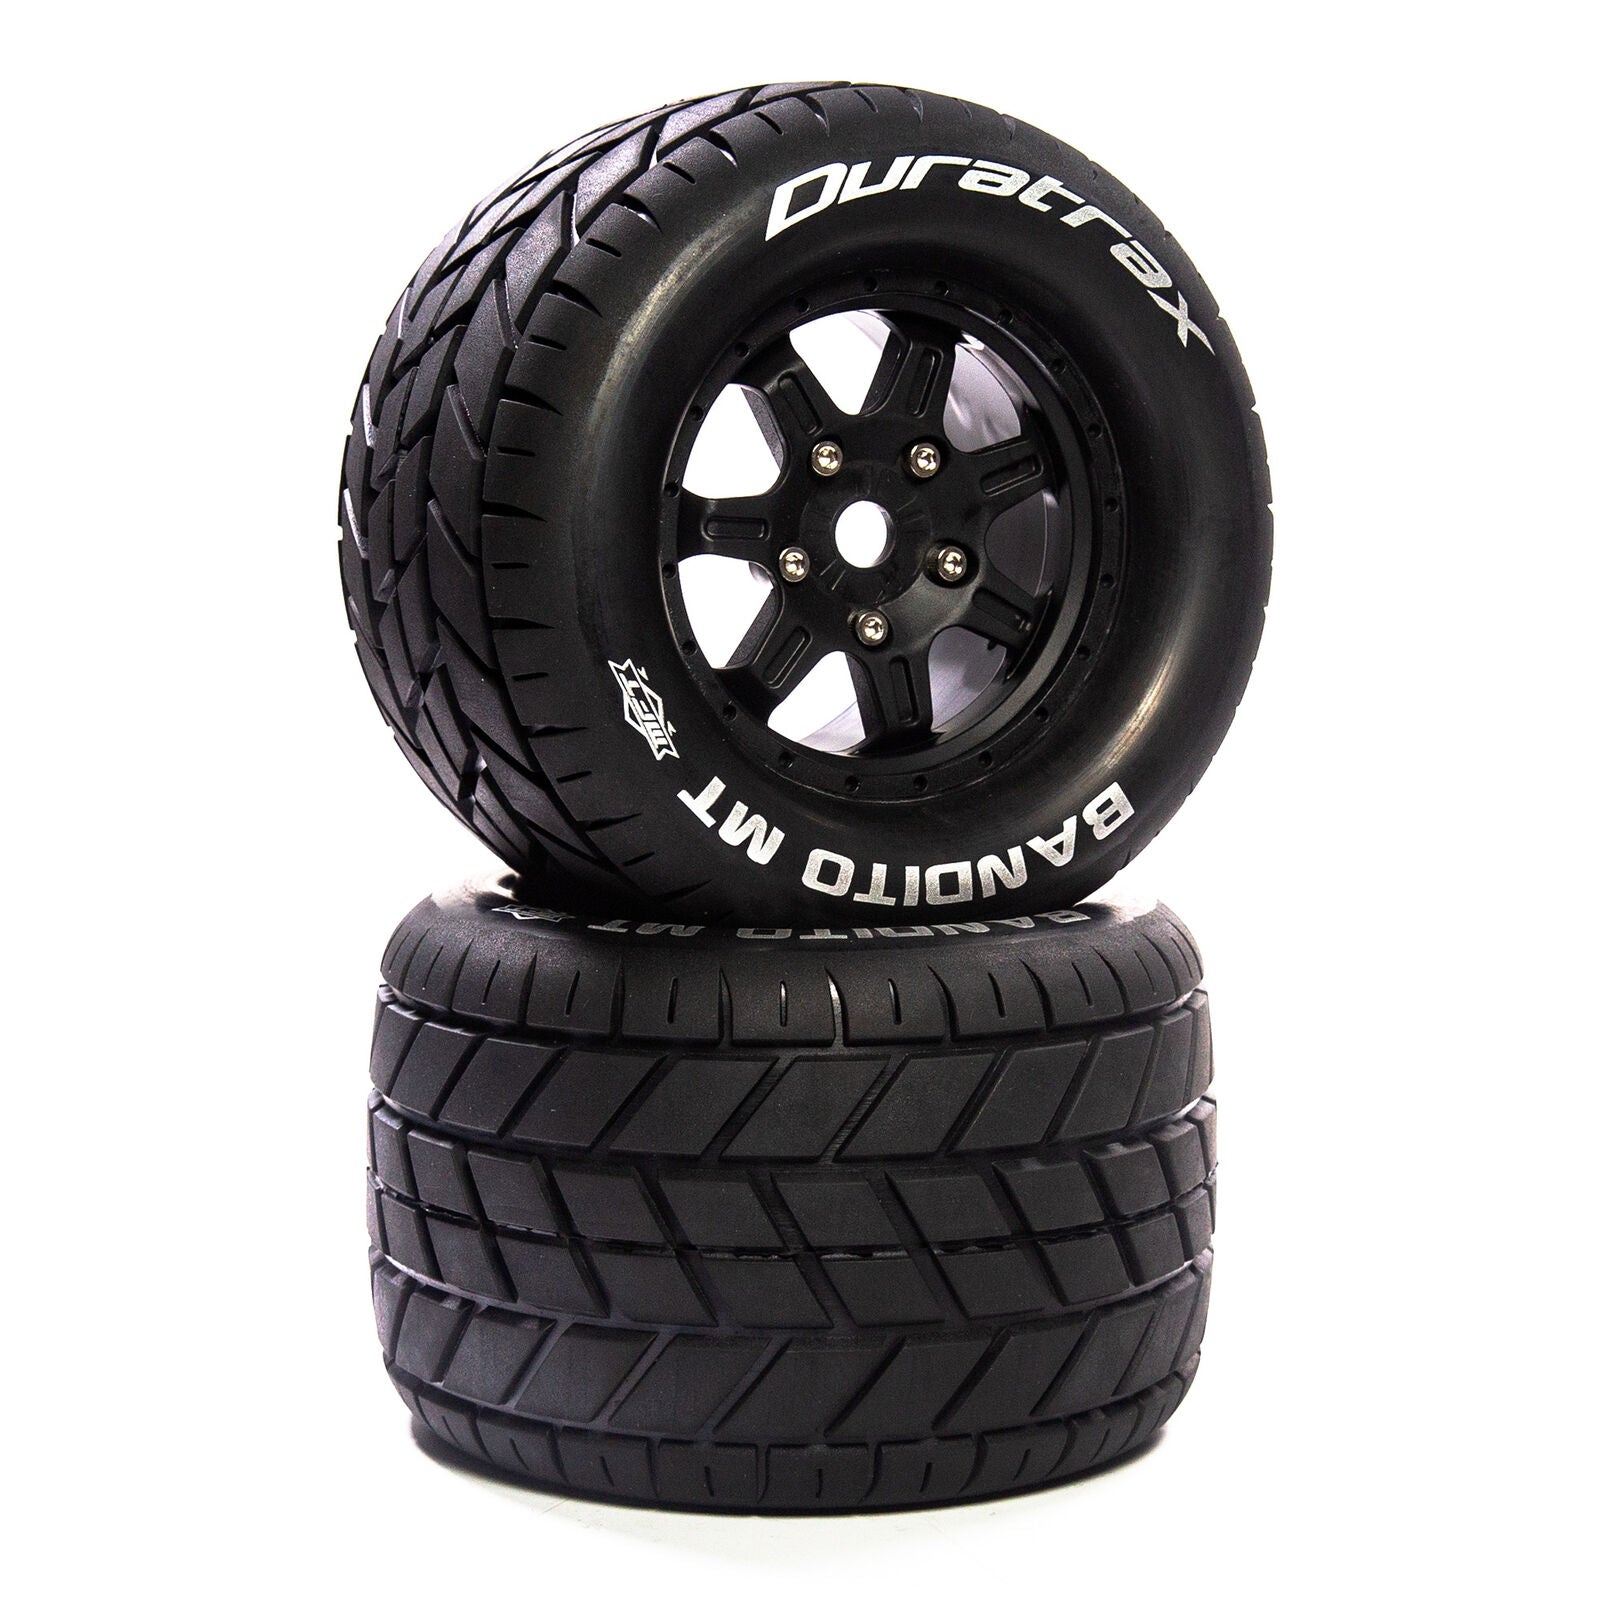 DURATRAX DTXC5626 Bandito MT Belt 3.8" Mounted Front/Rear Tires 0 Offset 17mm, Black (2)